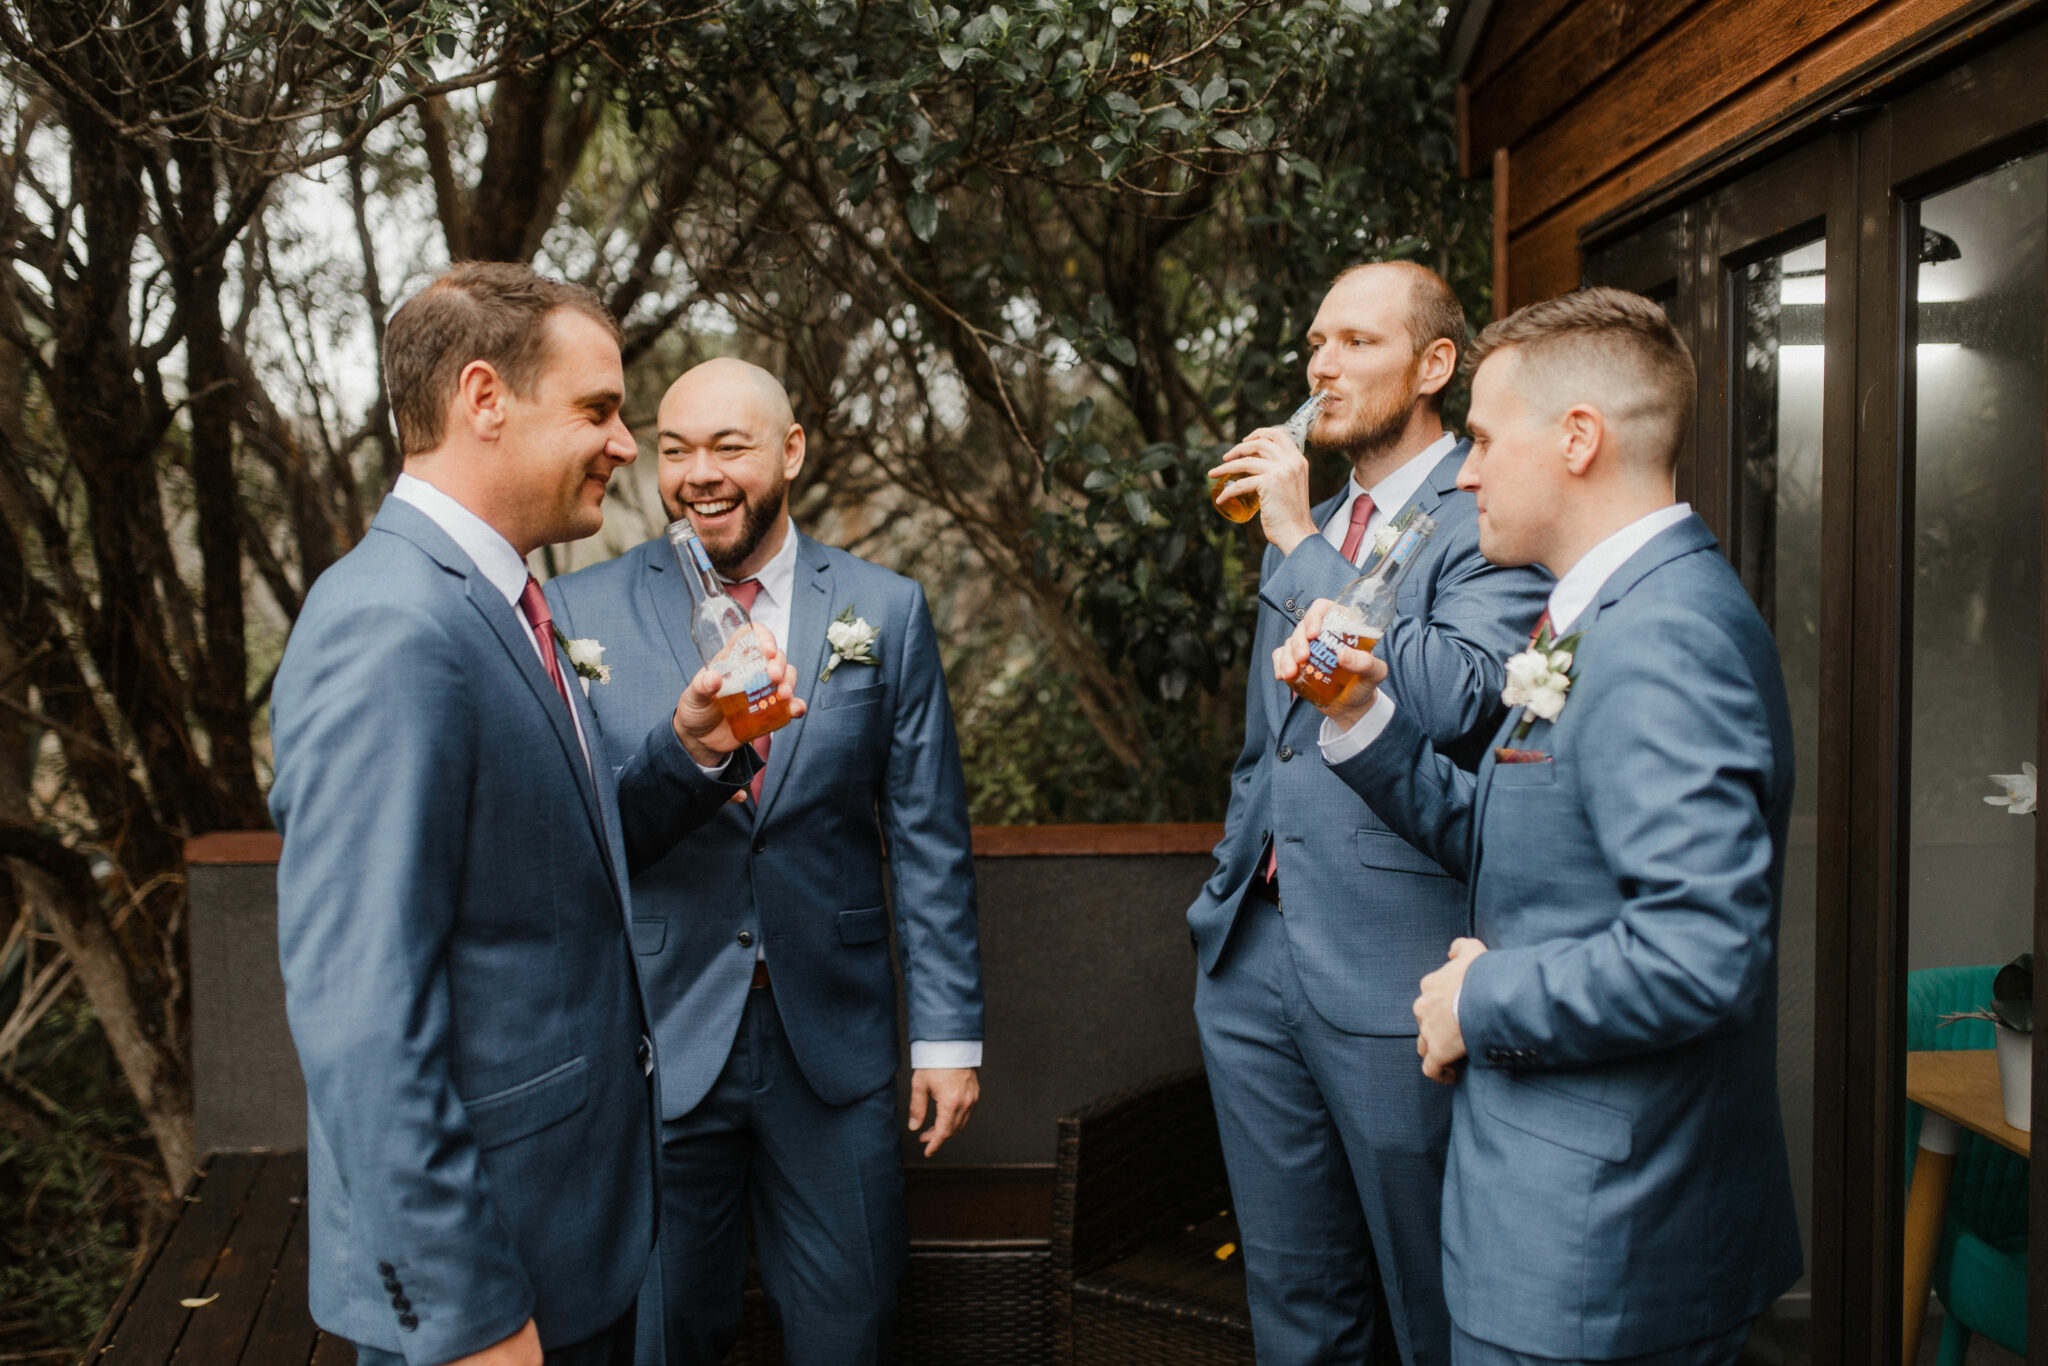 auckland groomsmen having a laugh